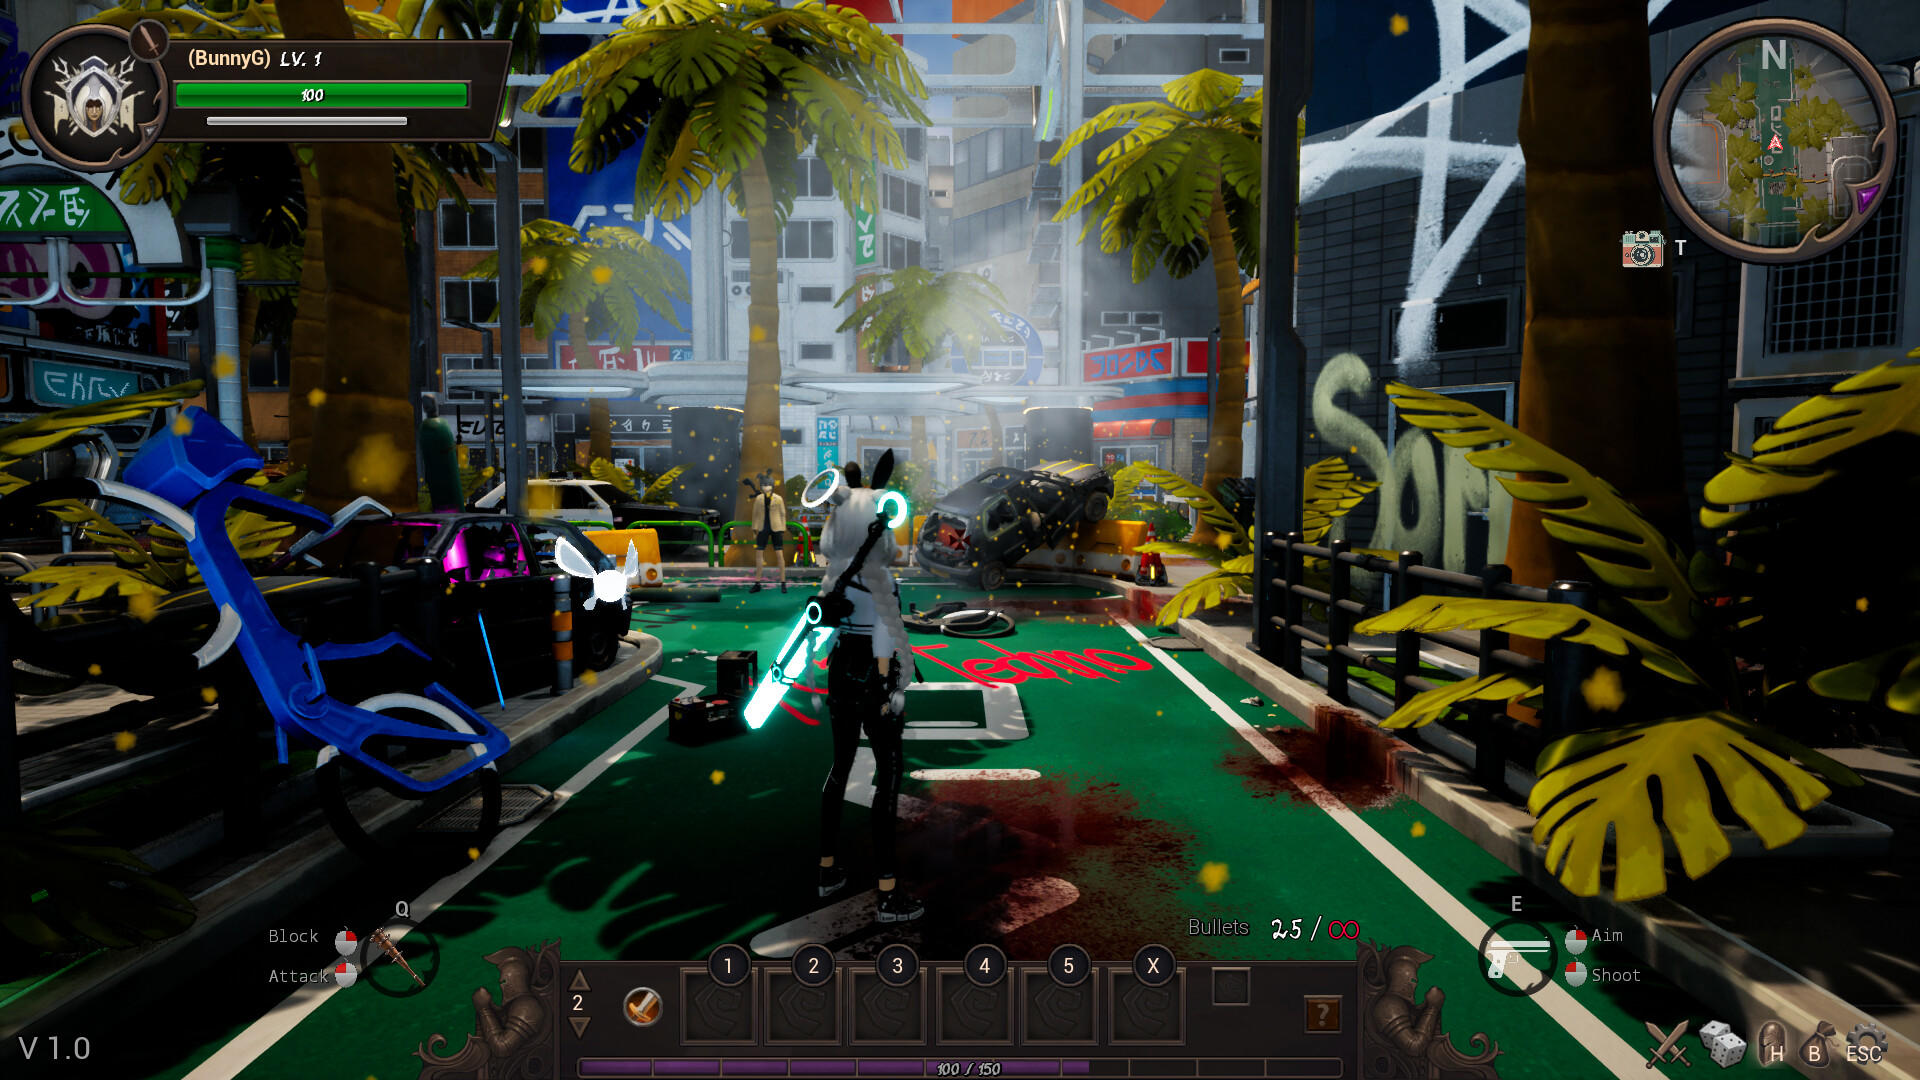 One More Night screenshot game